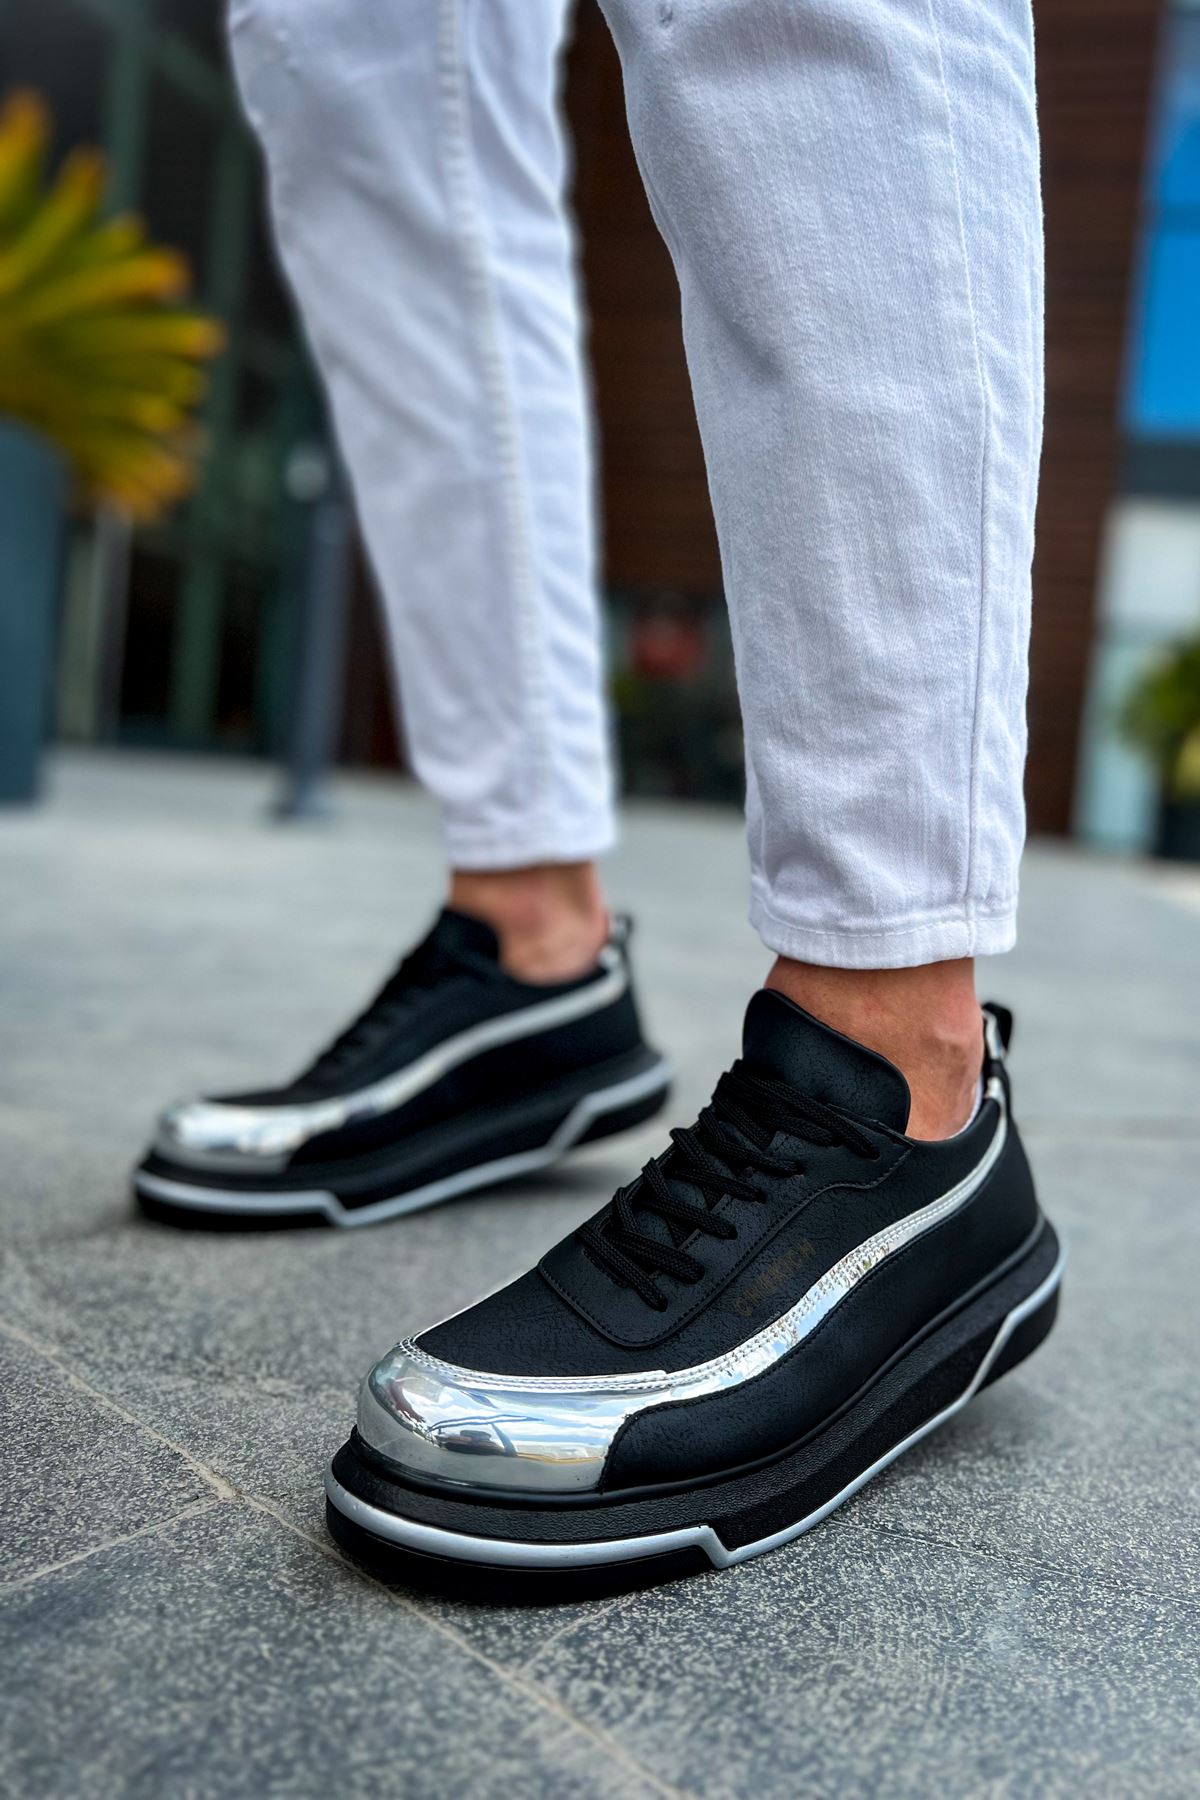 CH041 ST Men's Sneaker Shoes BLACK / SILVER - STREETMODE ™